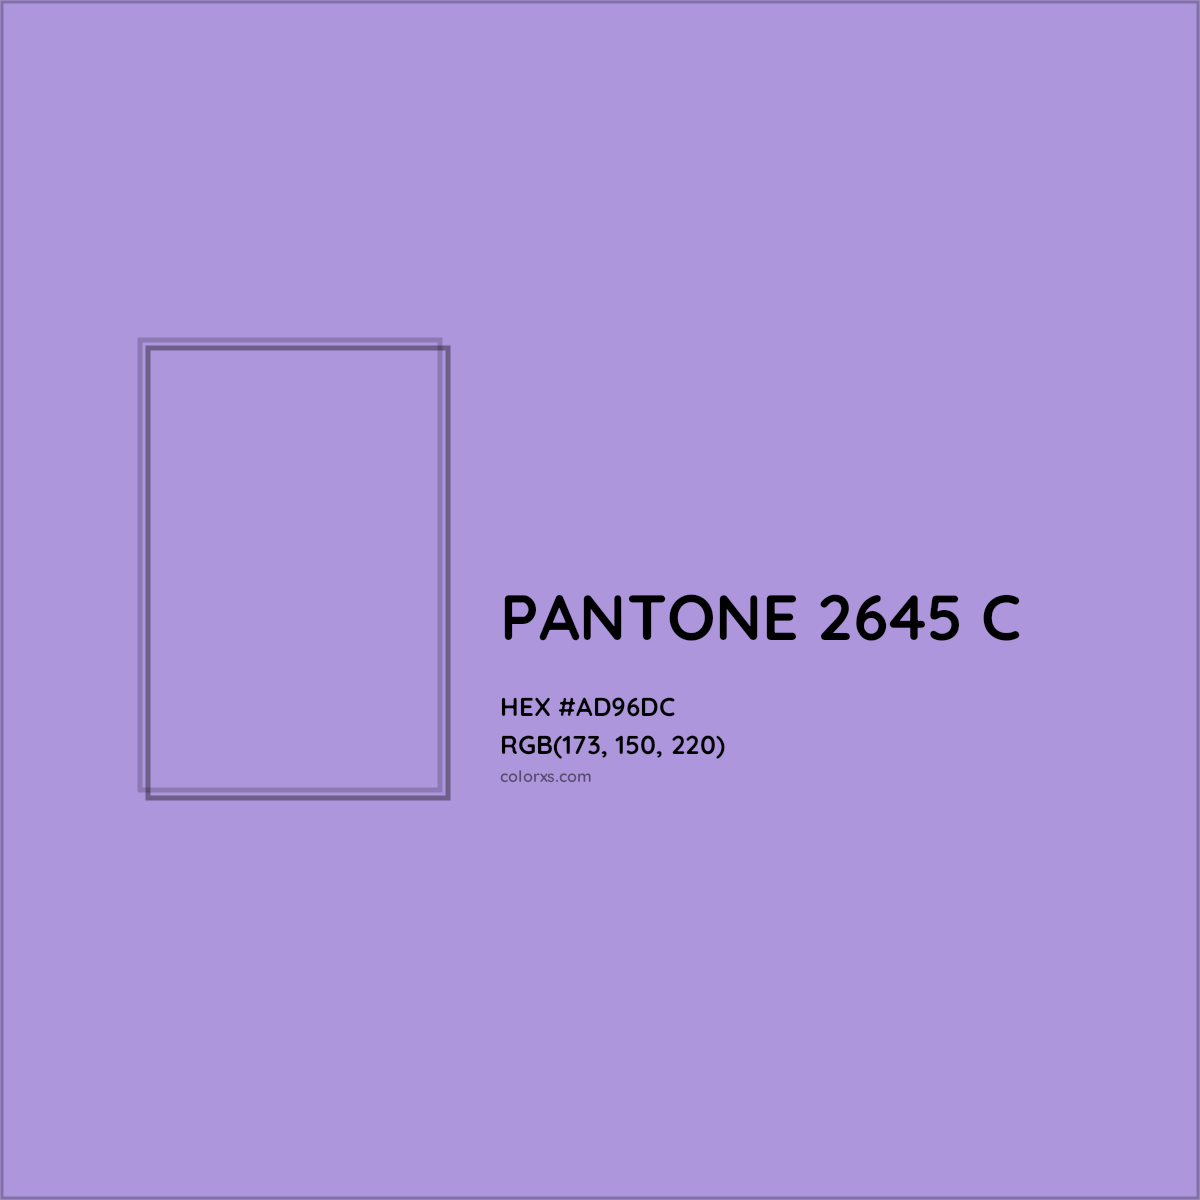 HEX #AD96DC PANTONE 2645 C CMS Pantone PMS - Color Code